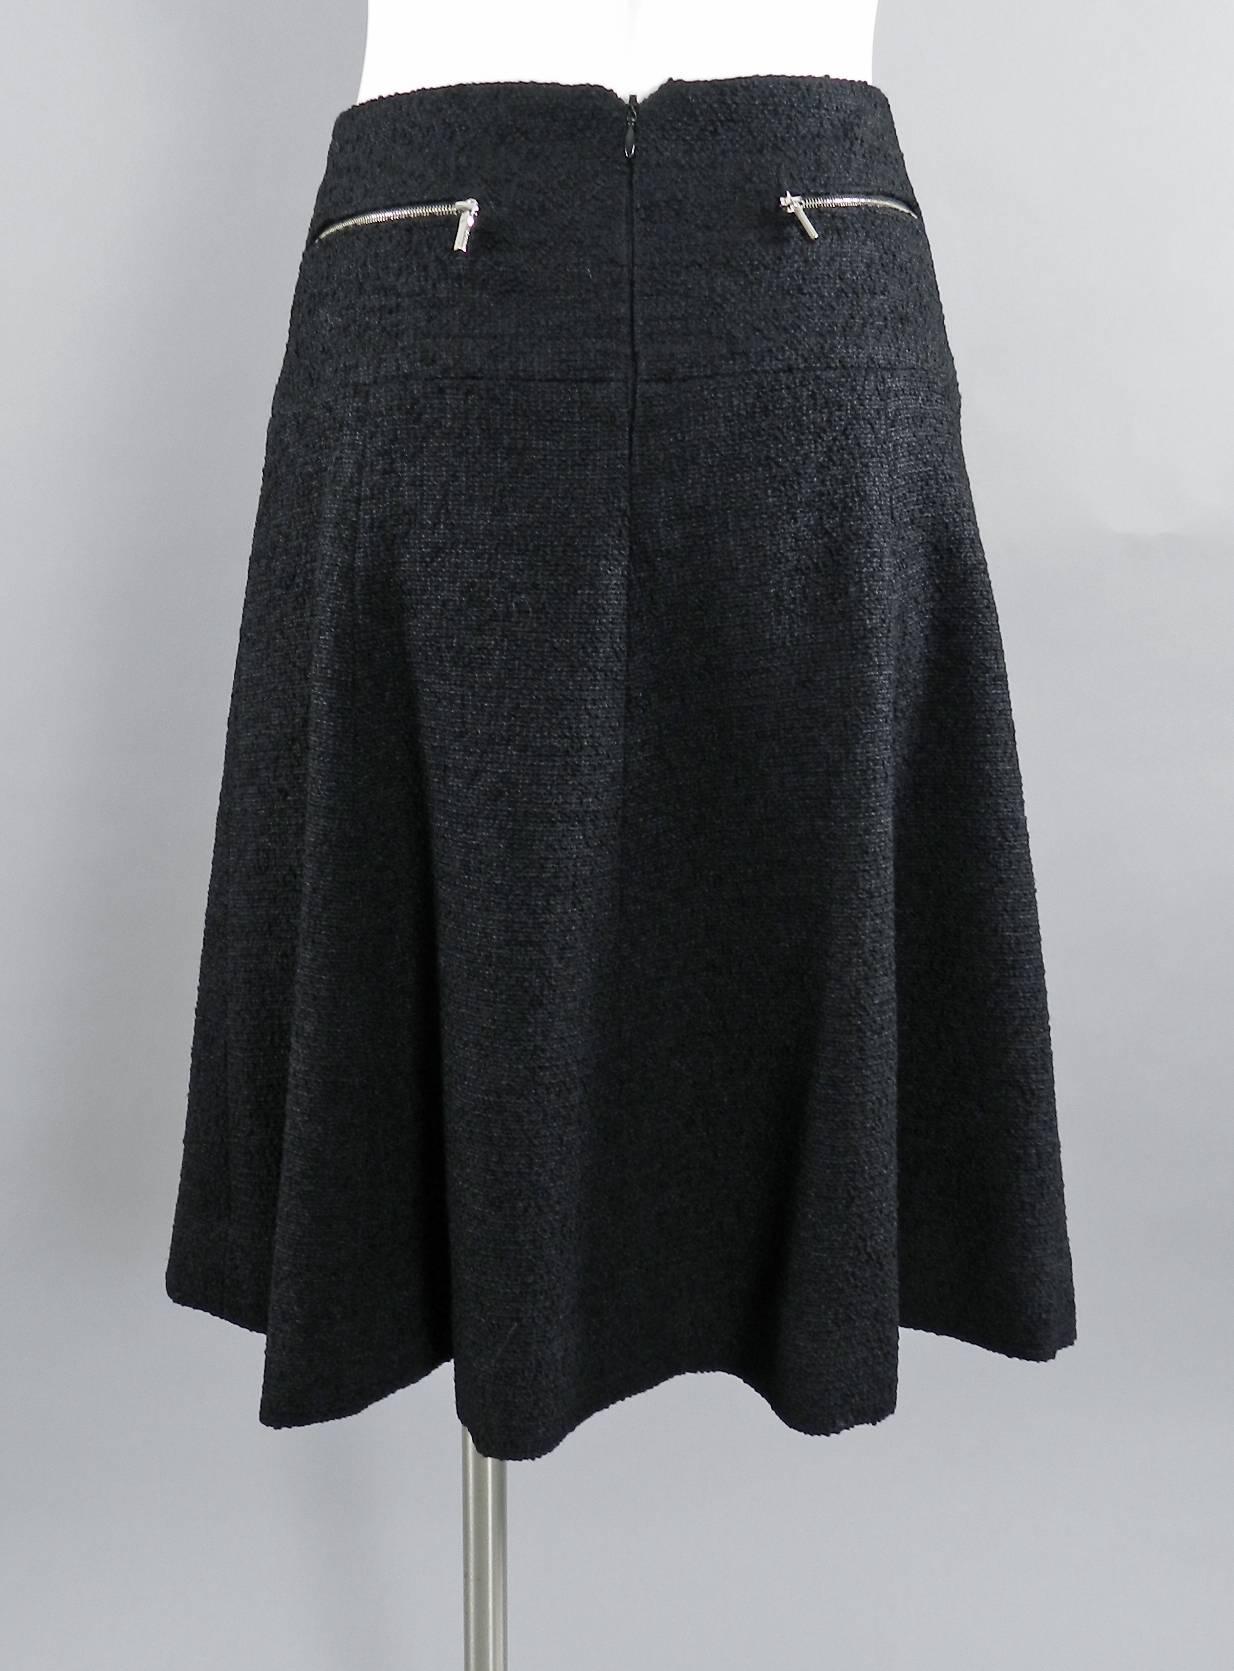 Chanel 13A Black wool Runway Skirt with Silver Zipper Detail 2